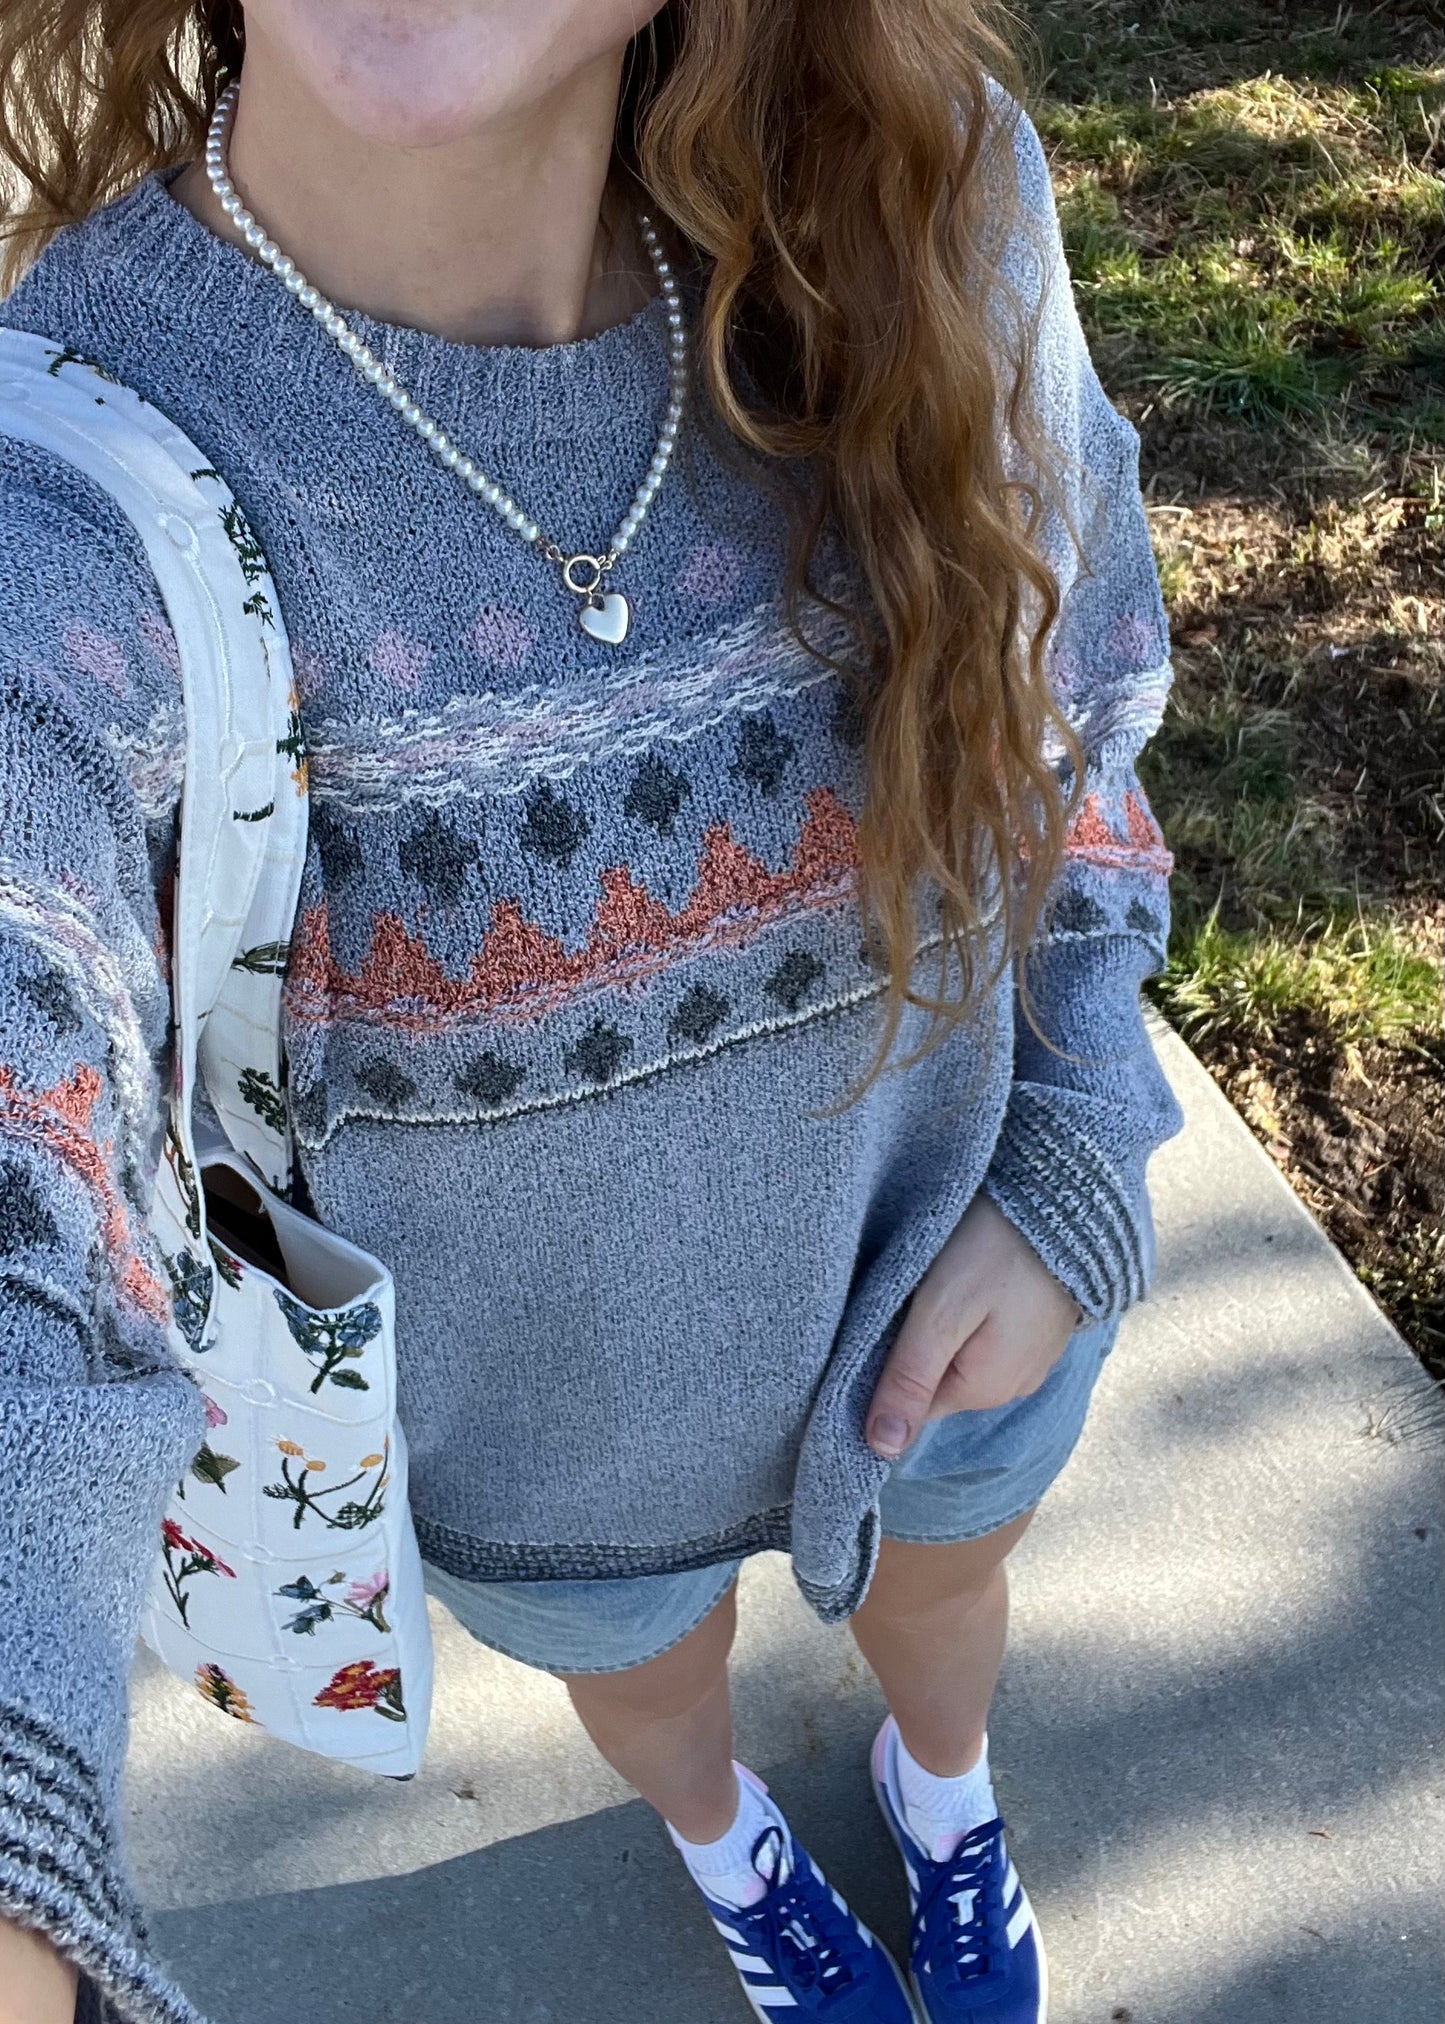 january sweater